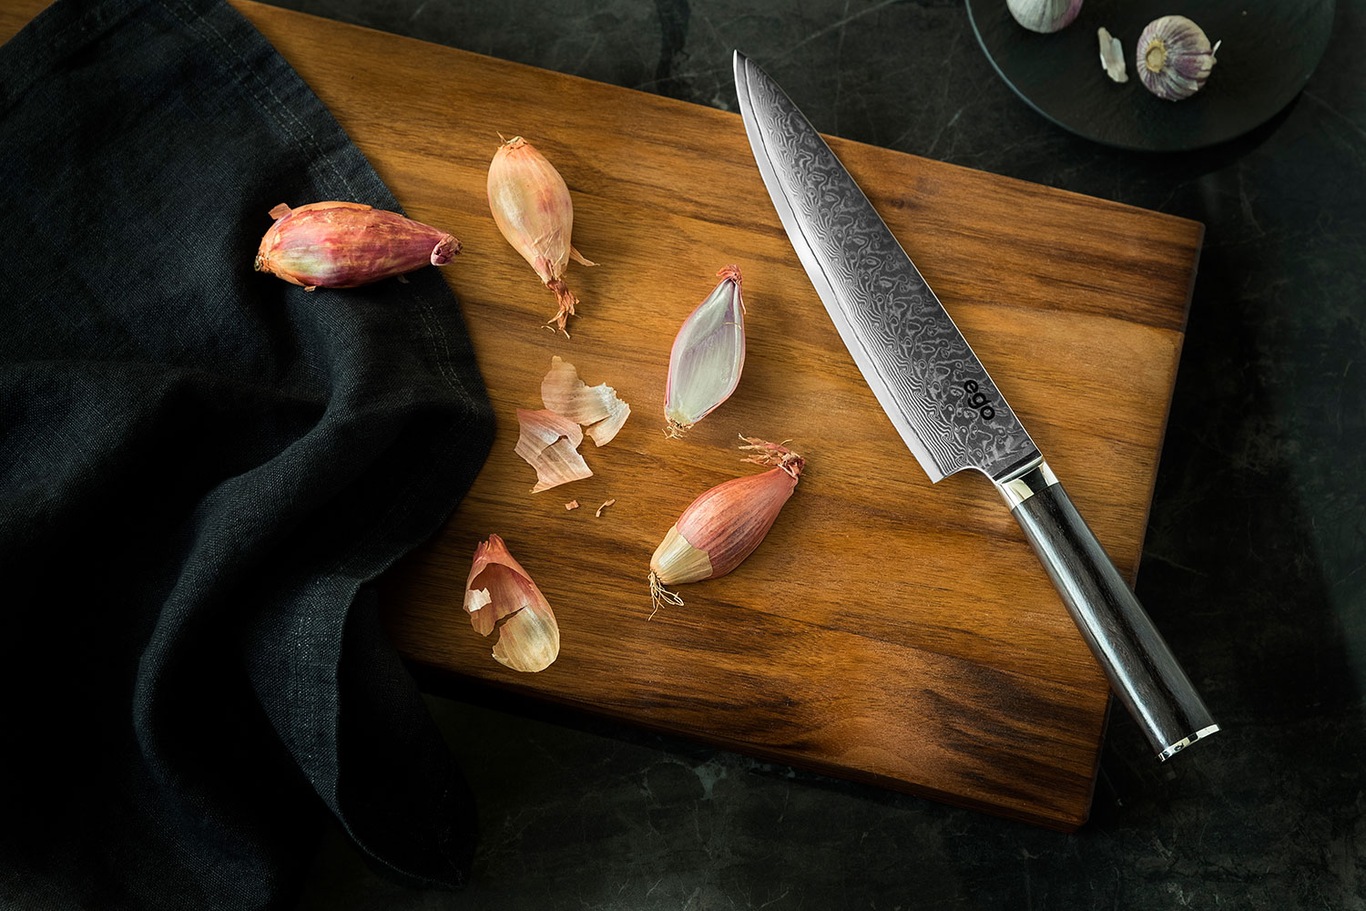 https://royaldesign.com/image/2/ego-vg-10-chef-knife-20-cm-2?w=800&quality=80